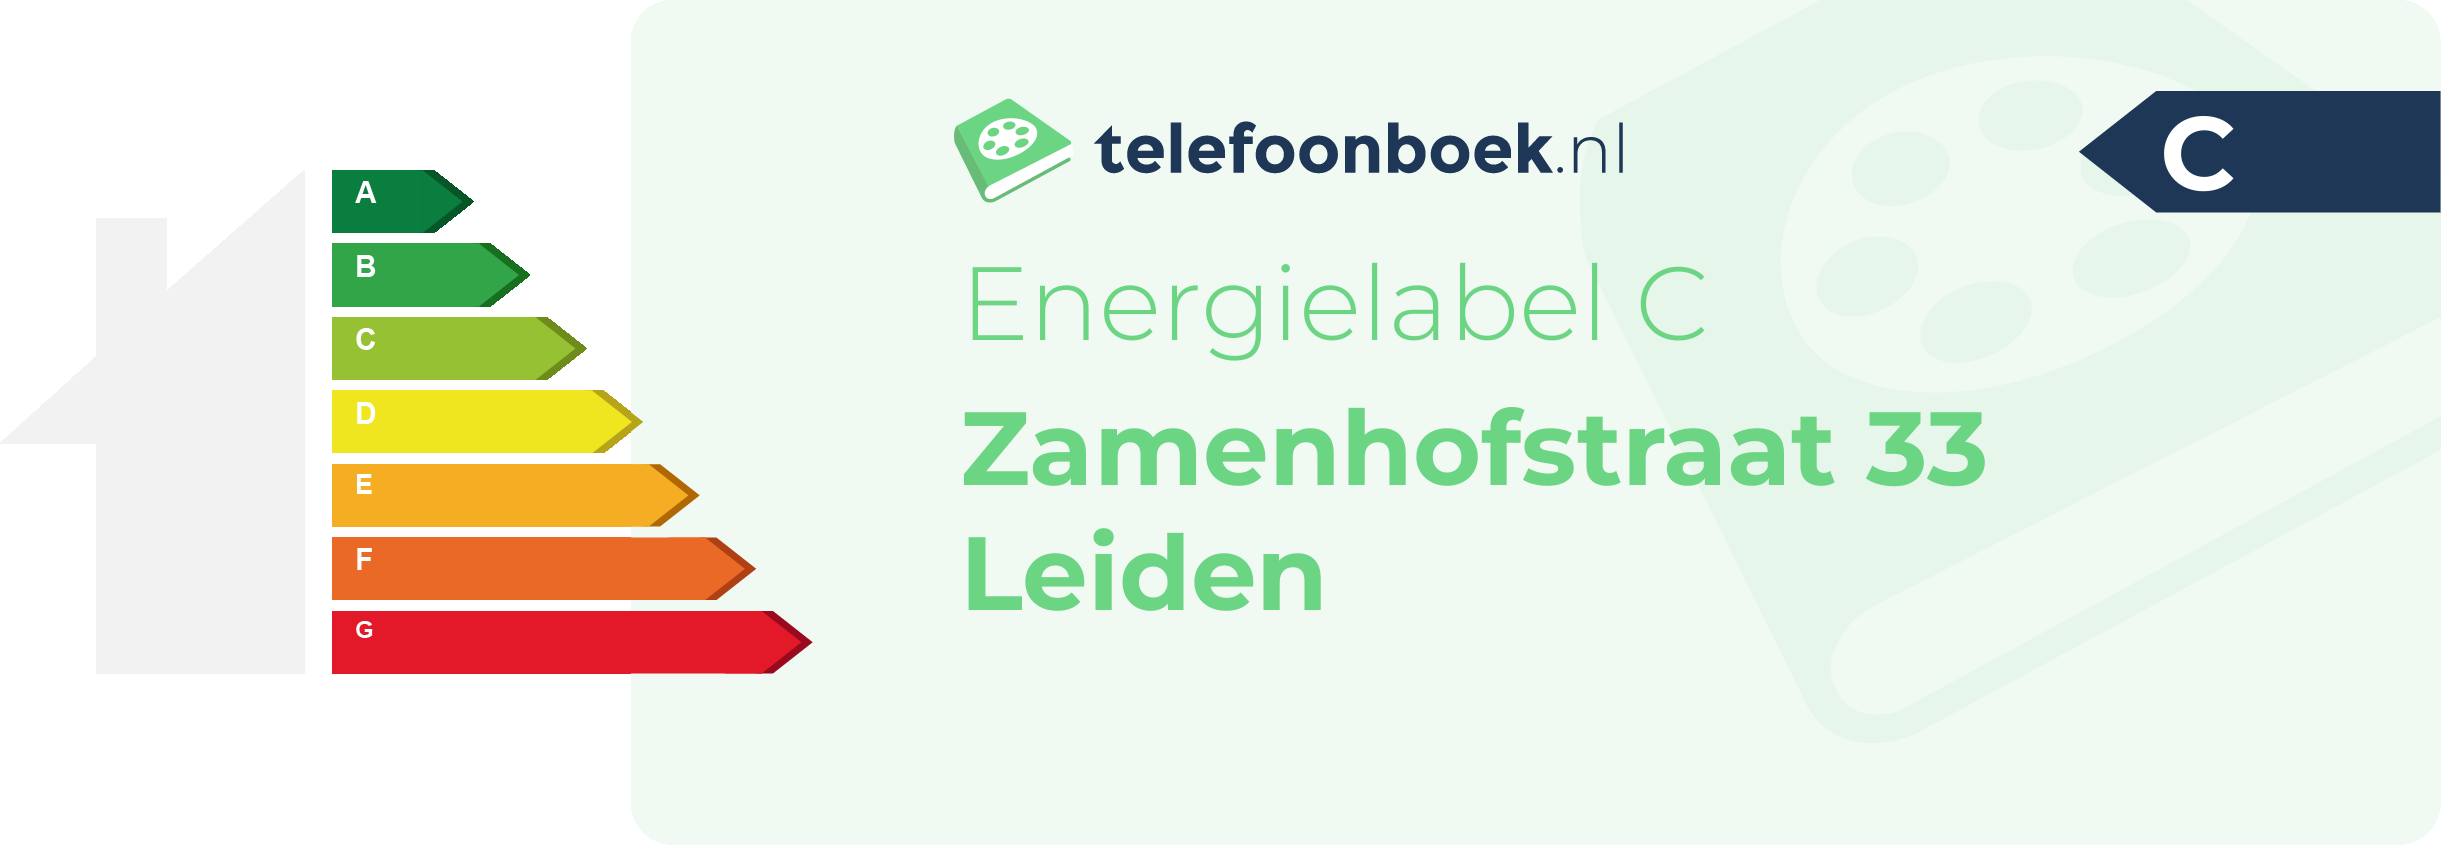 Energielabel Zamenhofstraat 33 Leiden